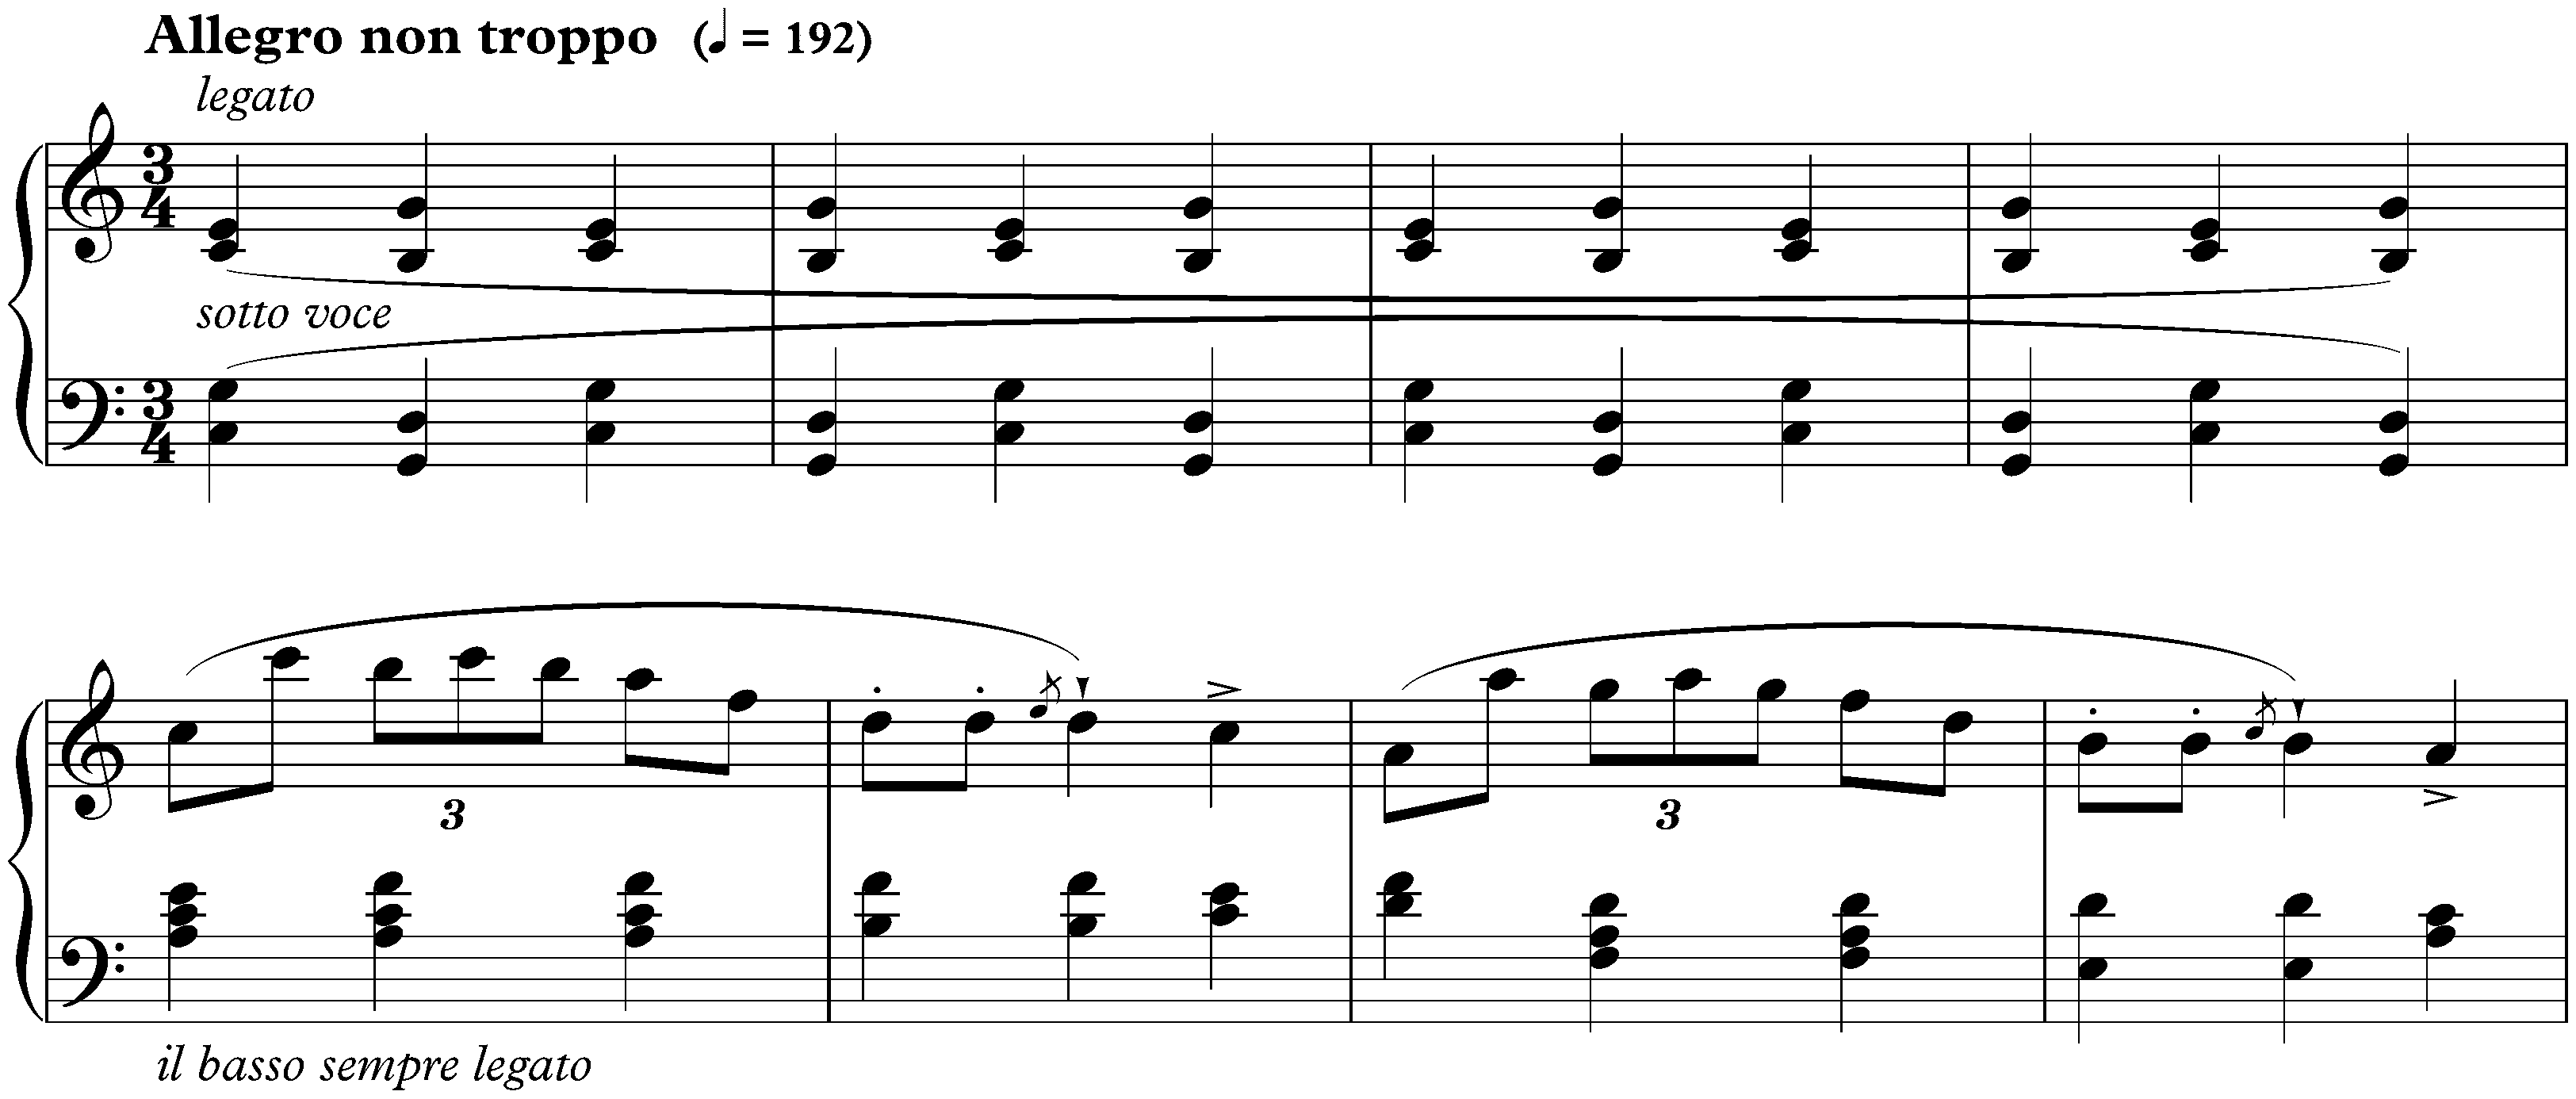 Four Mazurkas, op. 24; 2. C major